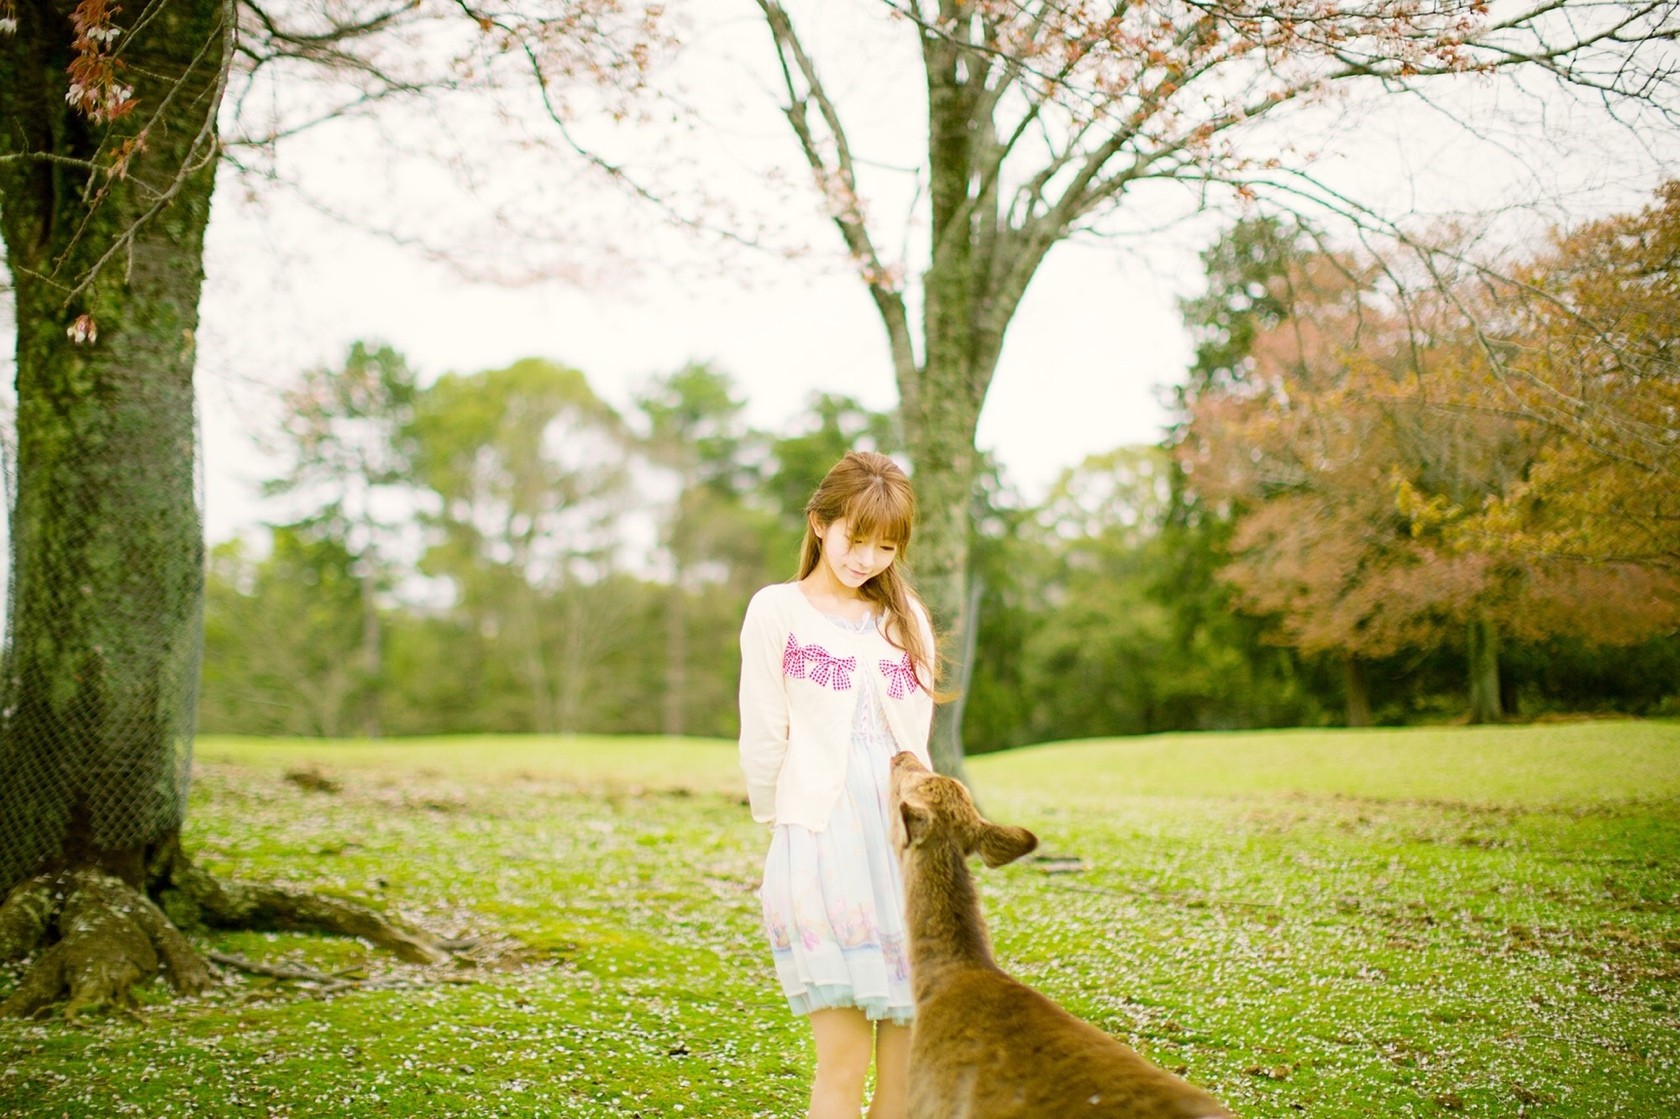 People 1680x1119 Yurisa Chan Korean model women women outdoors mammals deer animals trees outdoors standing